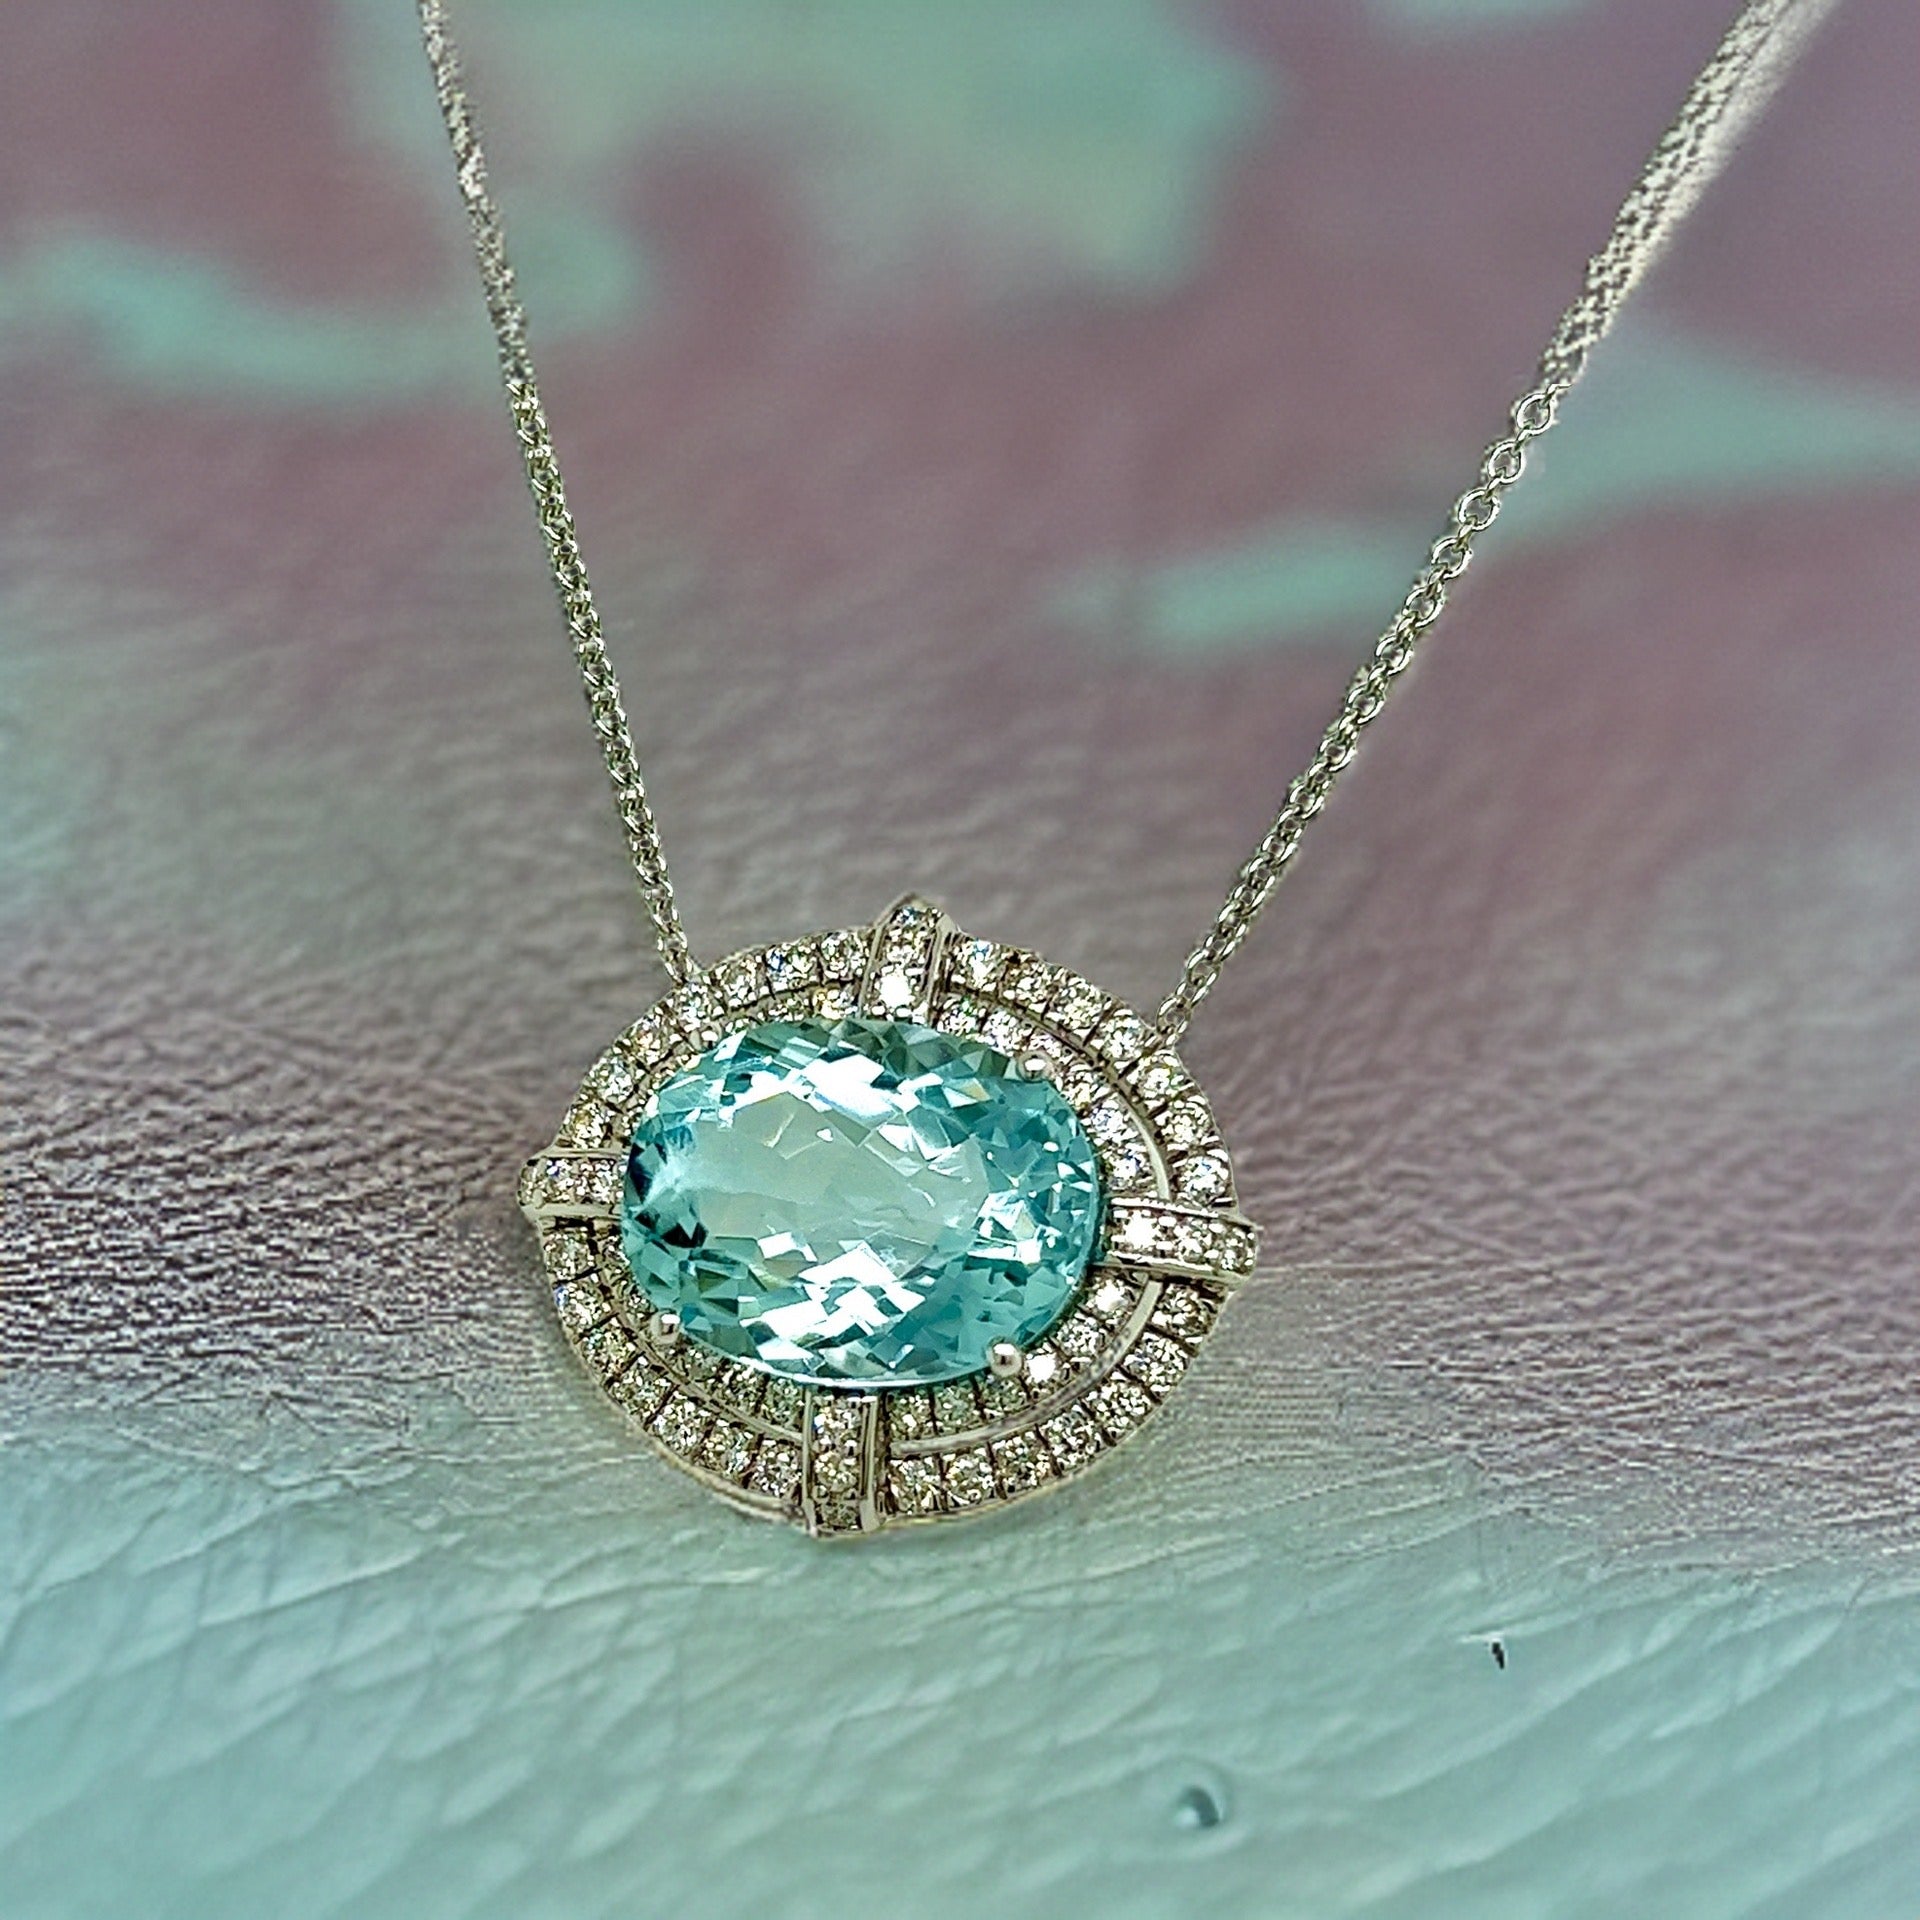 Natural Aquamarine Diamond Pendant With Chain 17.5" 14k W Gold 7.09 TCW Certified $6,490 217088 - Certified Fine Jewelry